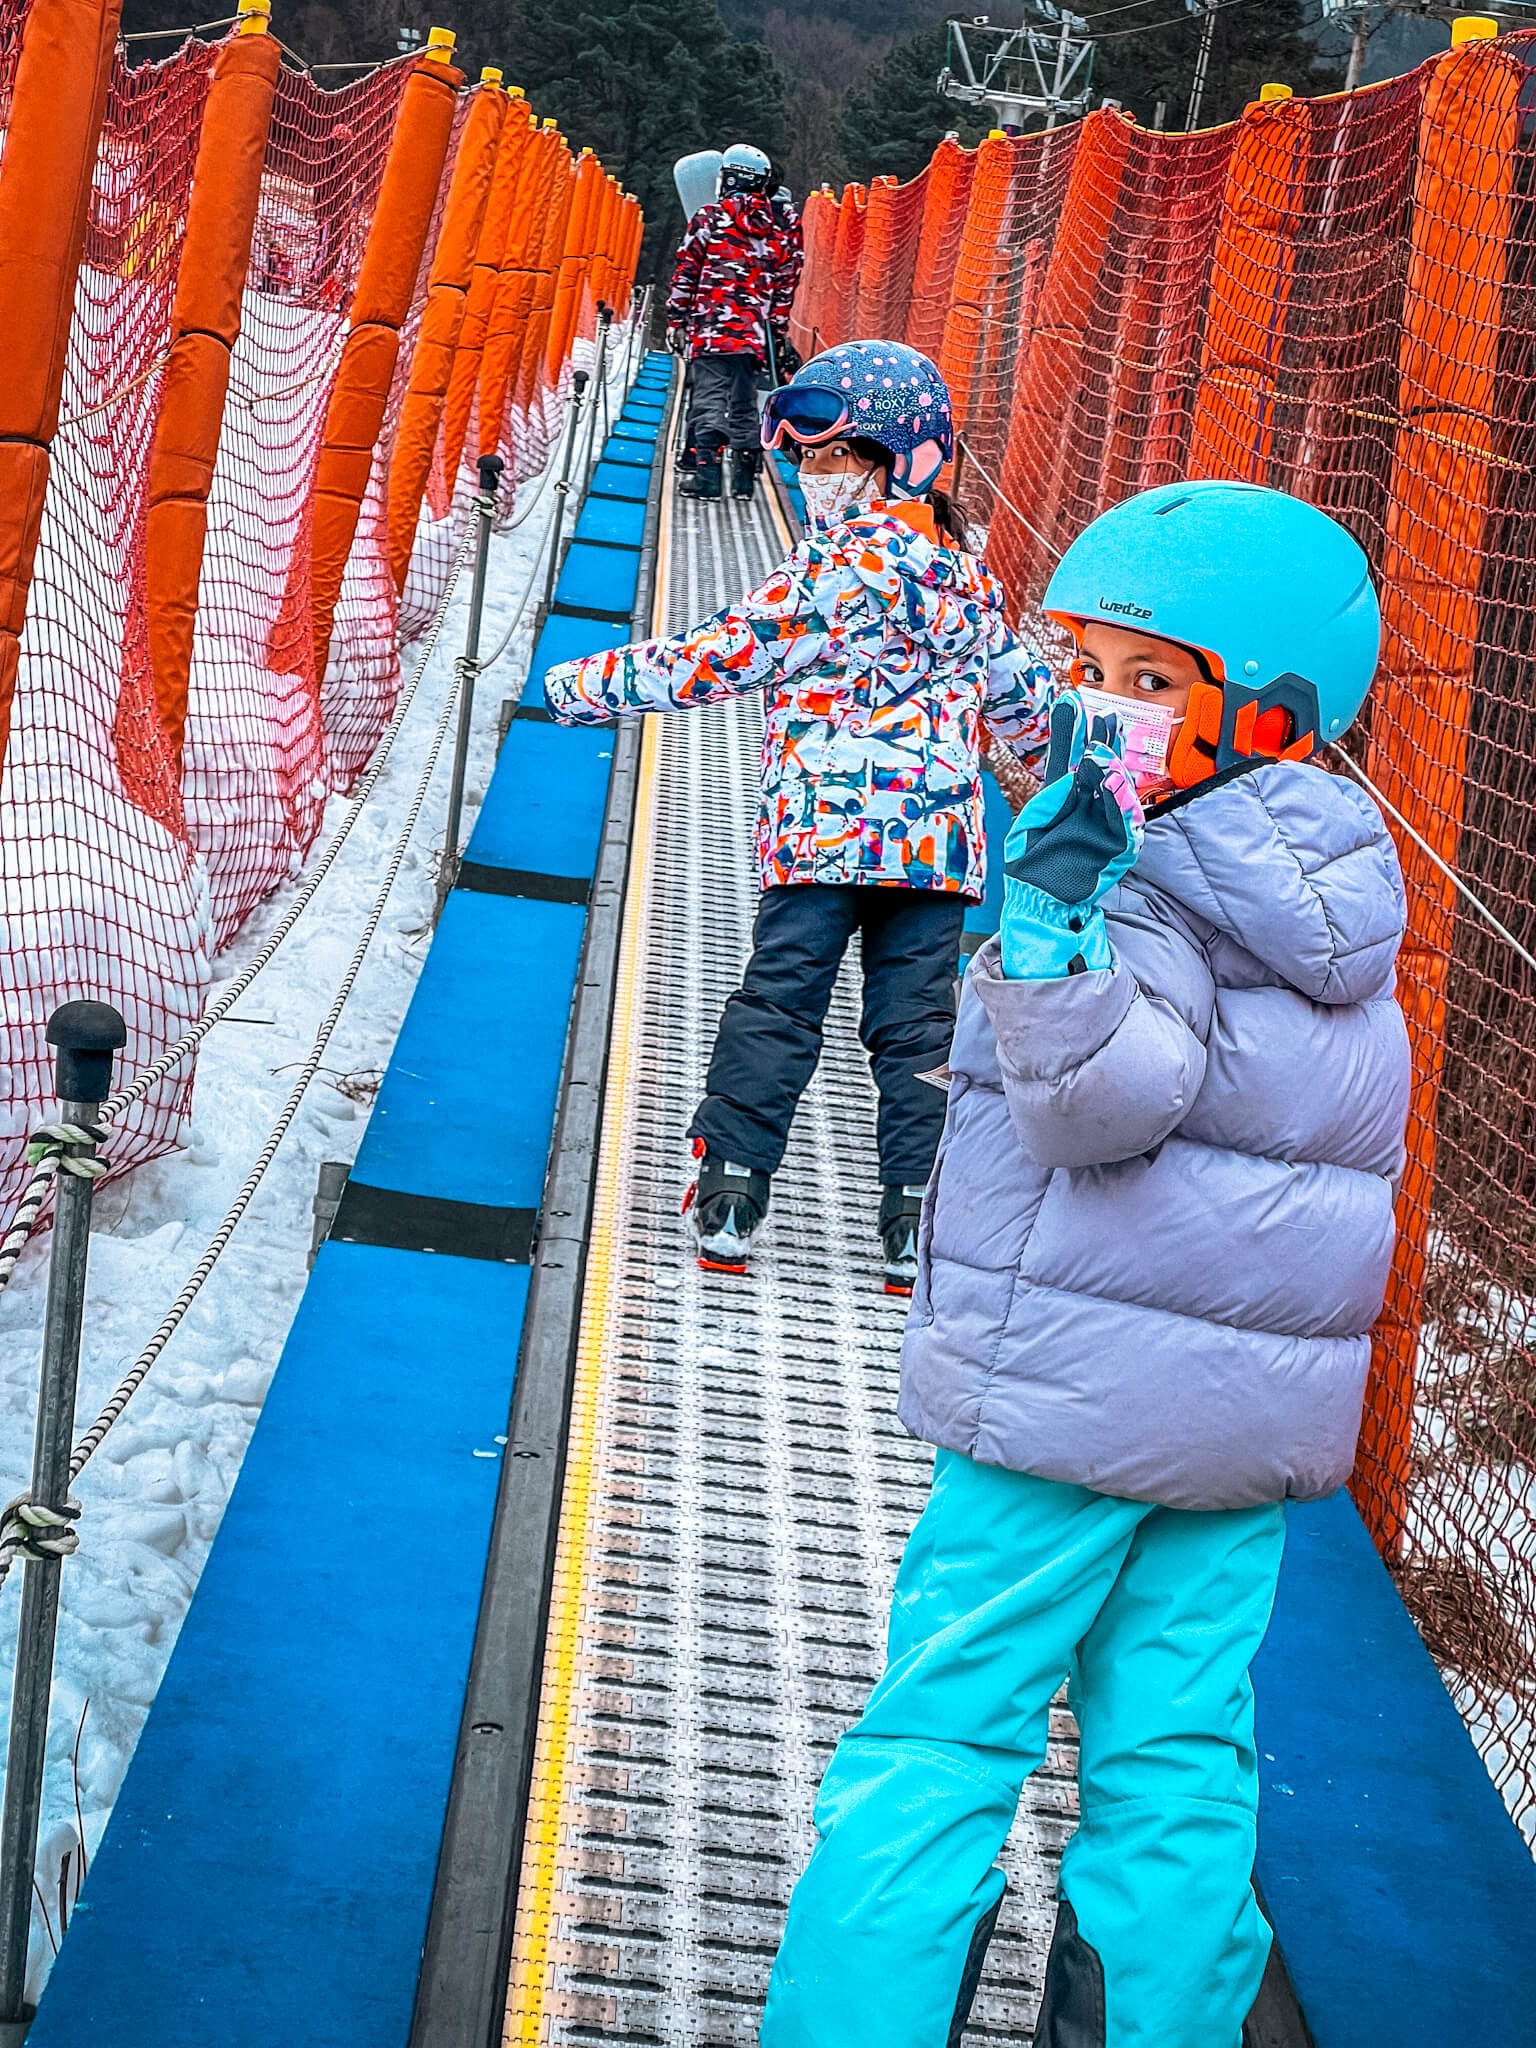 sun kid conveyer belt at bears town ski resort near seoul